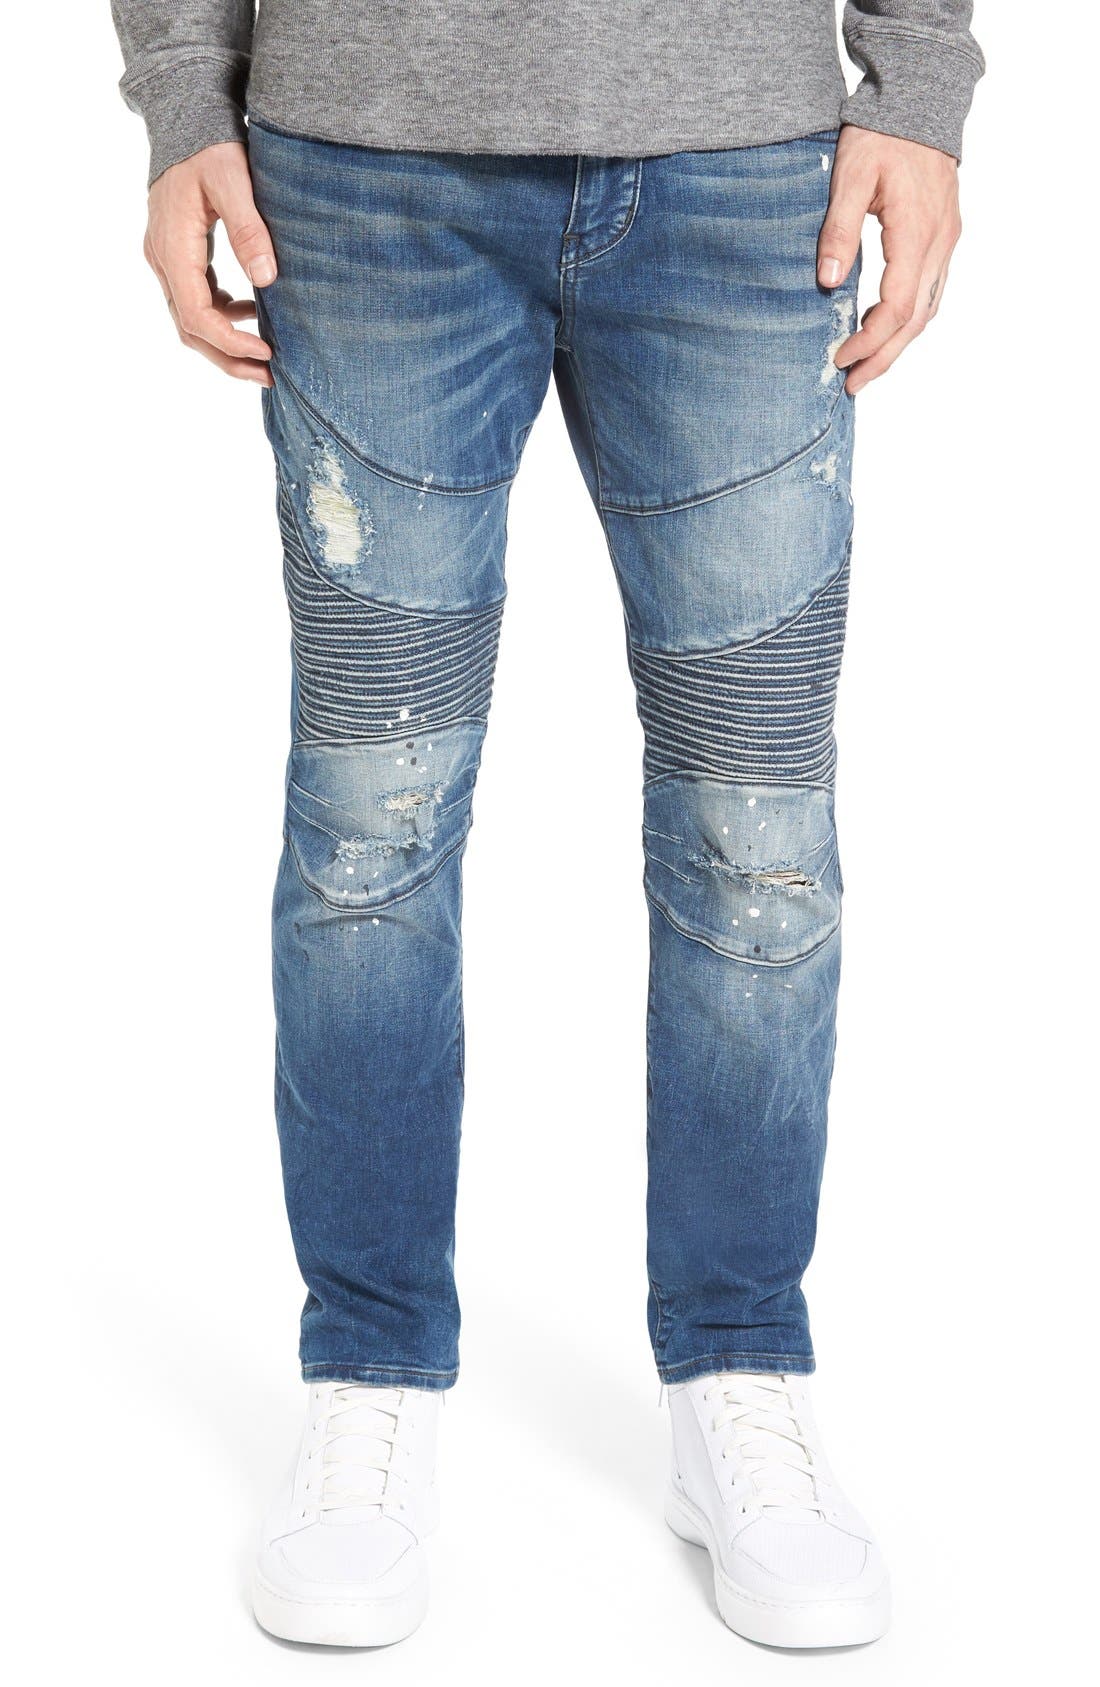 true religion rocco slim fit jeans